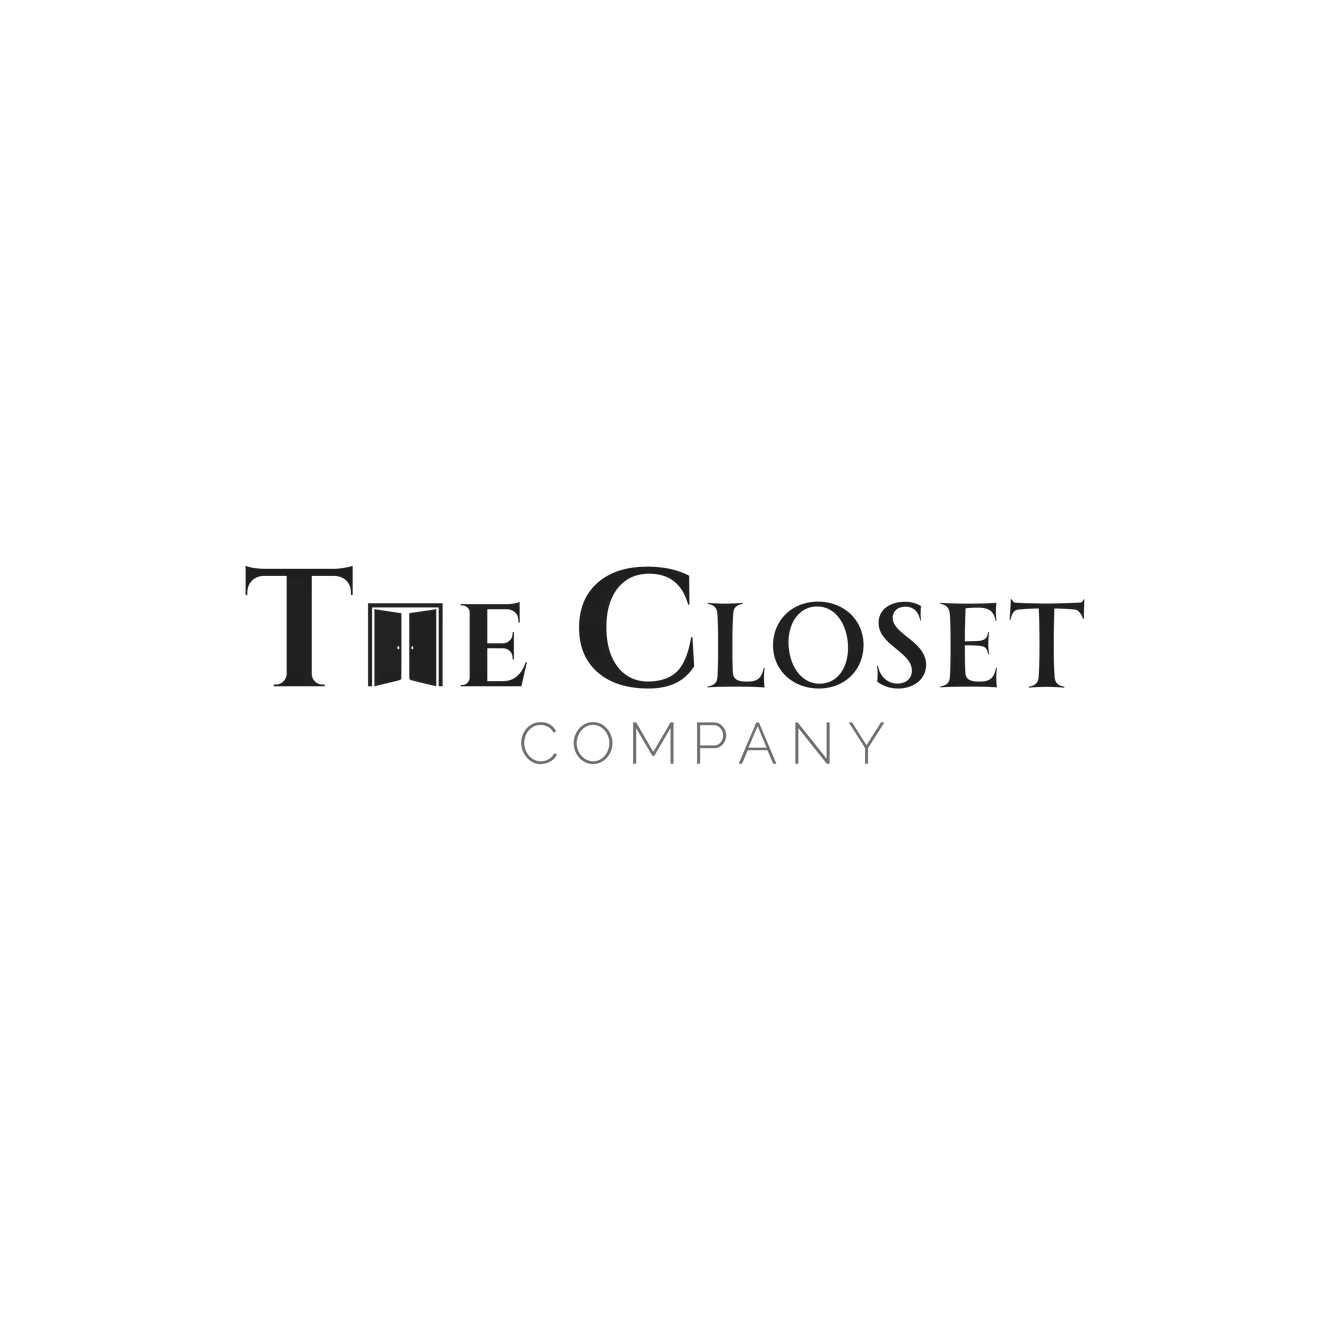 The Closet Company